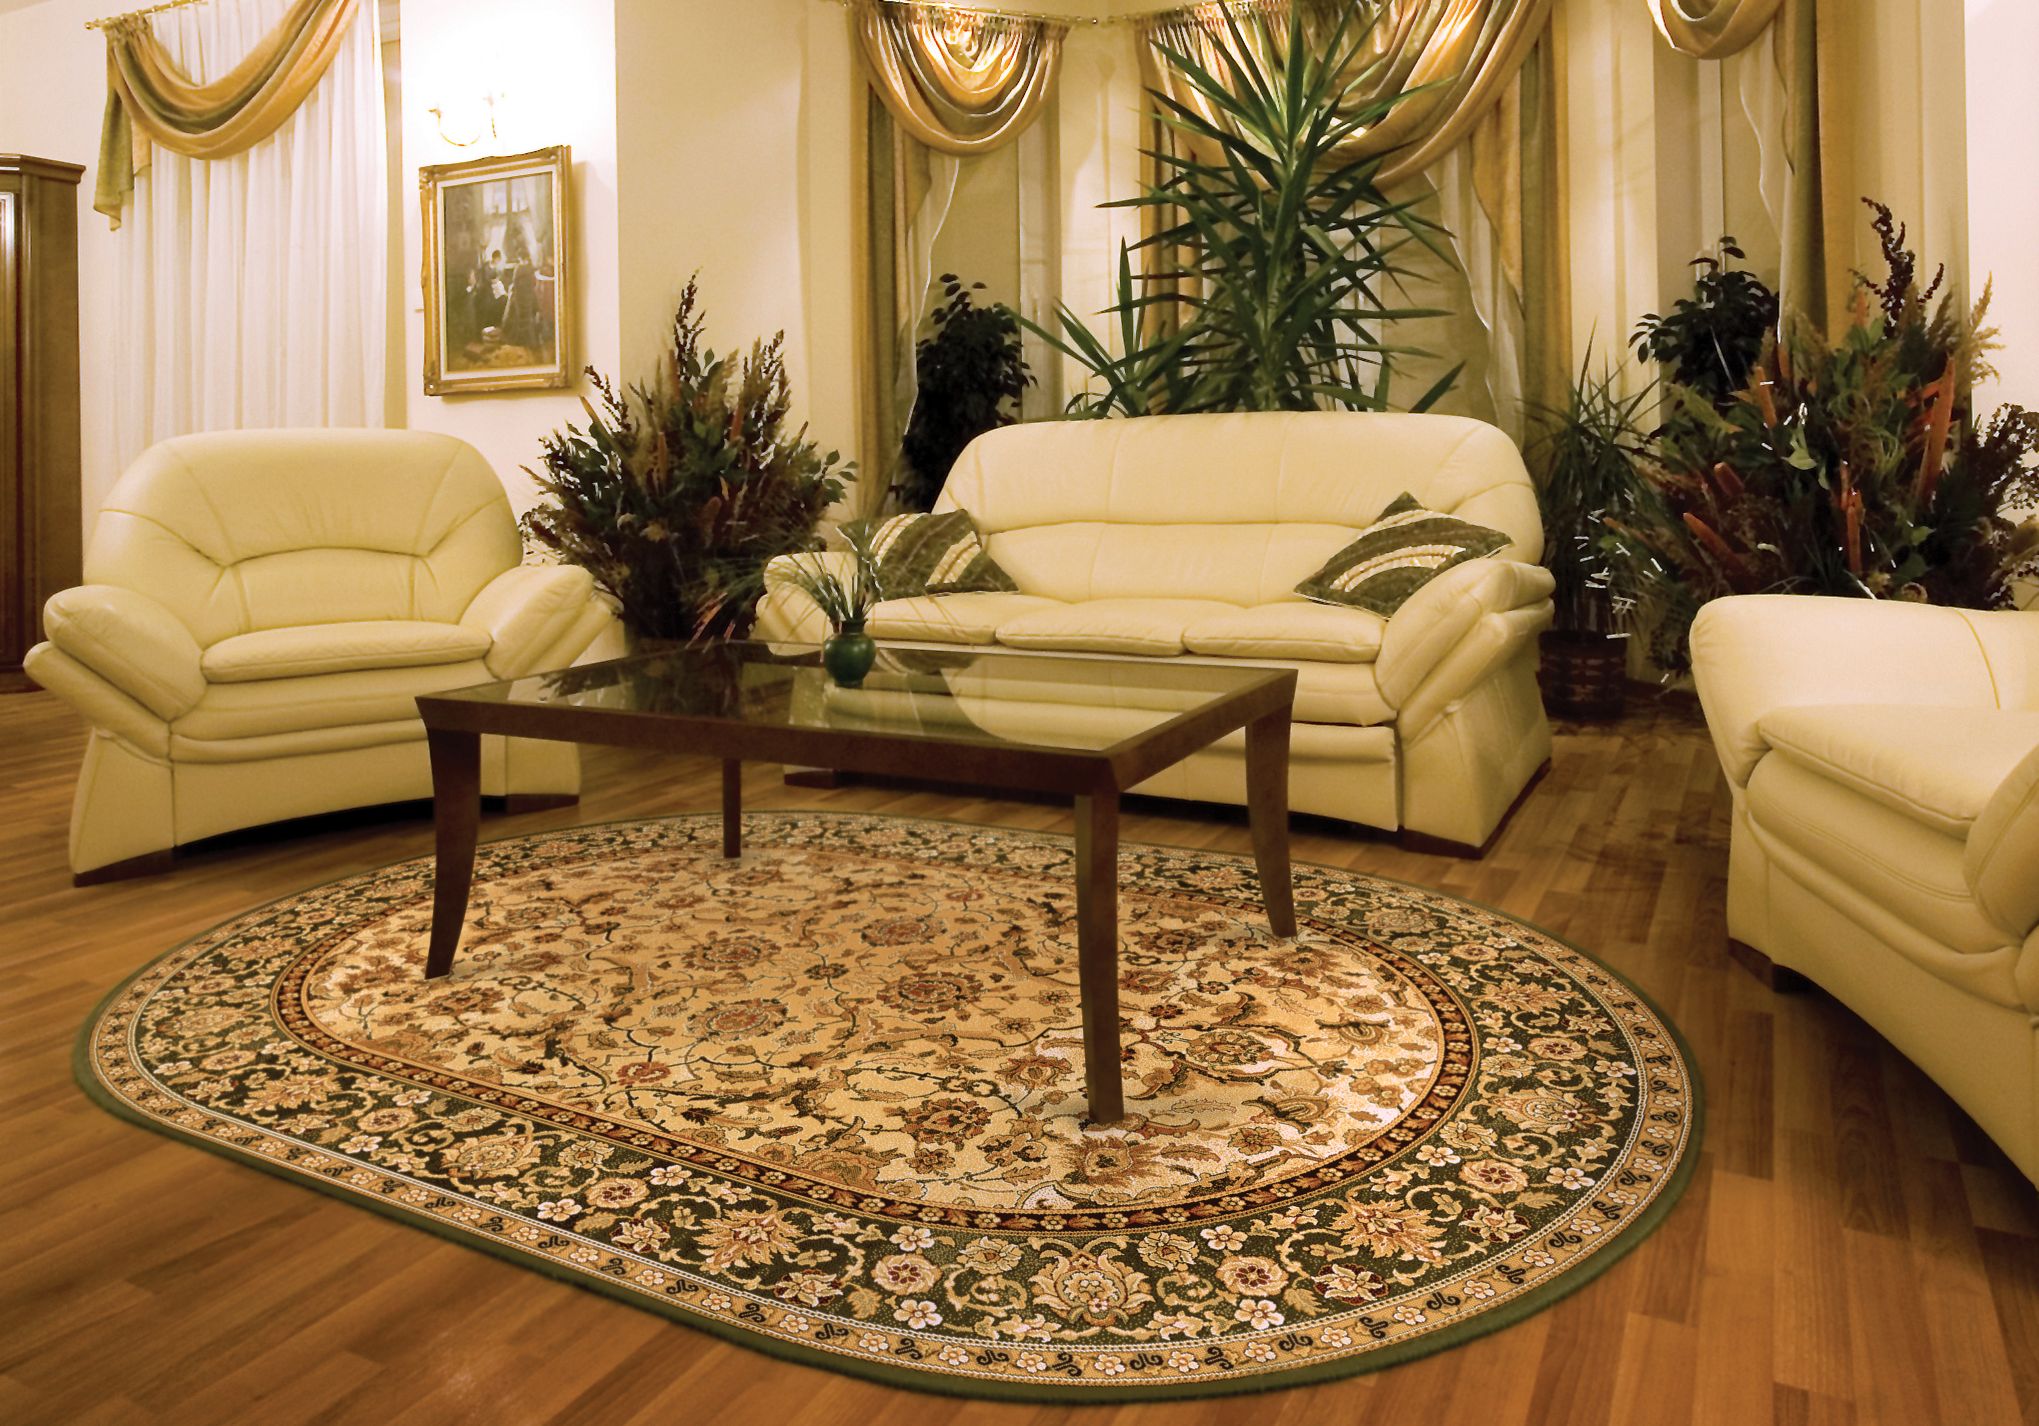 carpets in a modern interior design photo